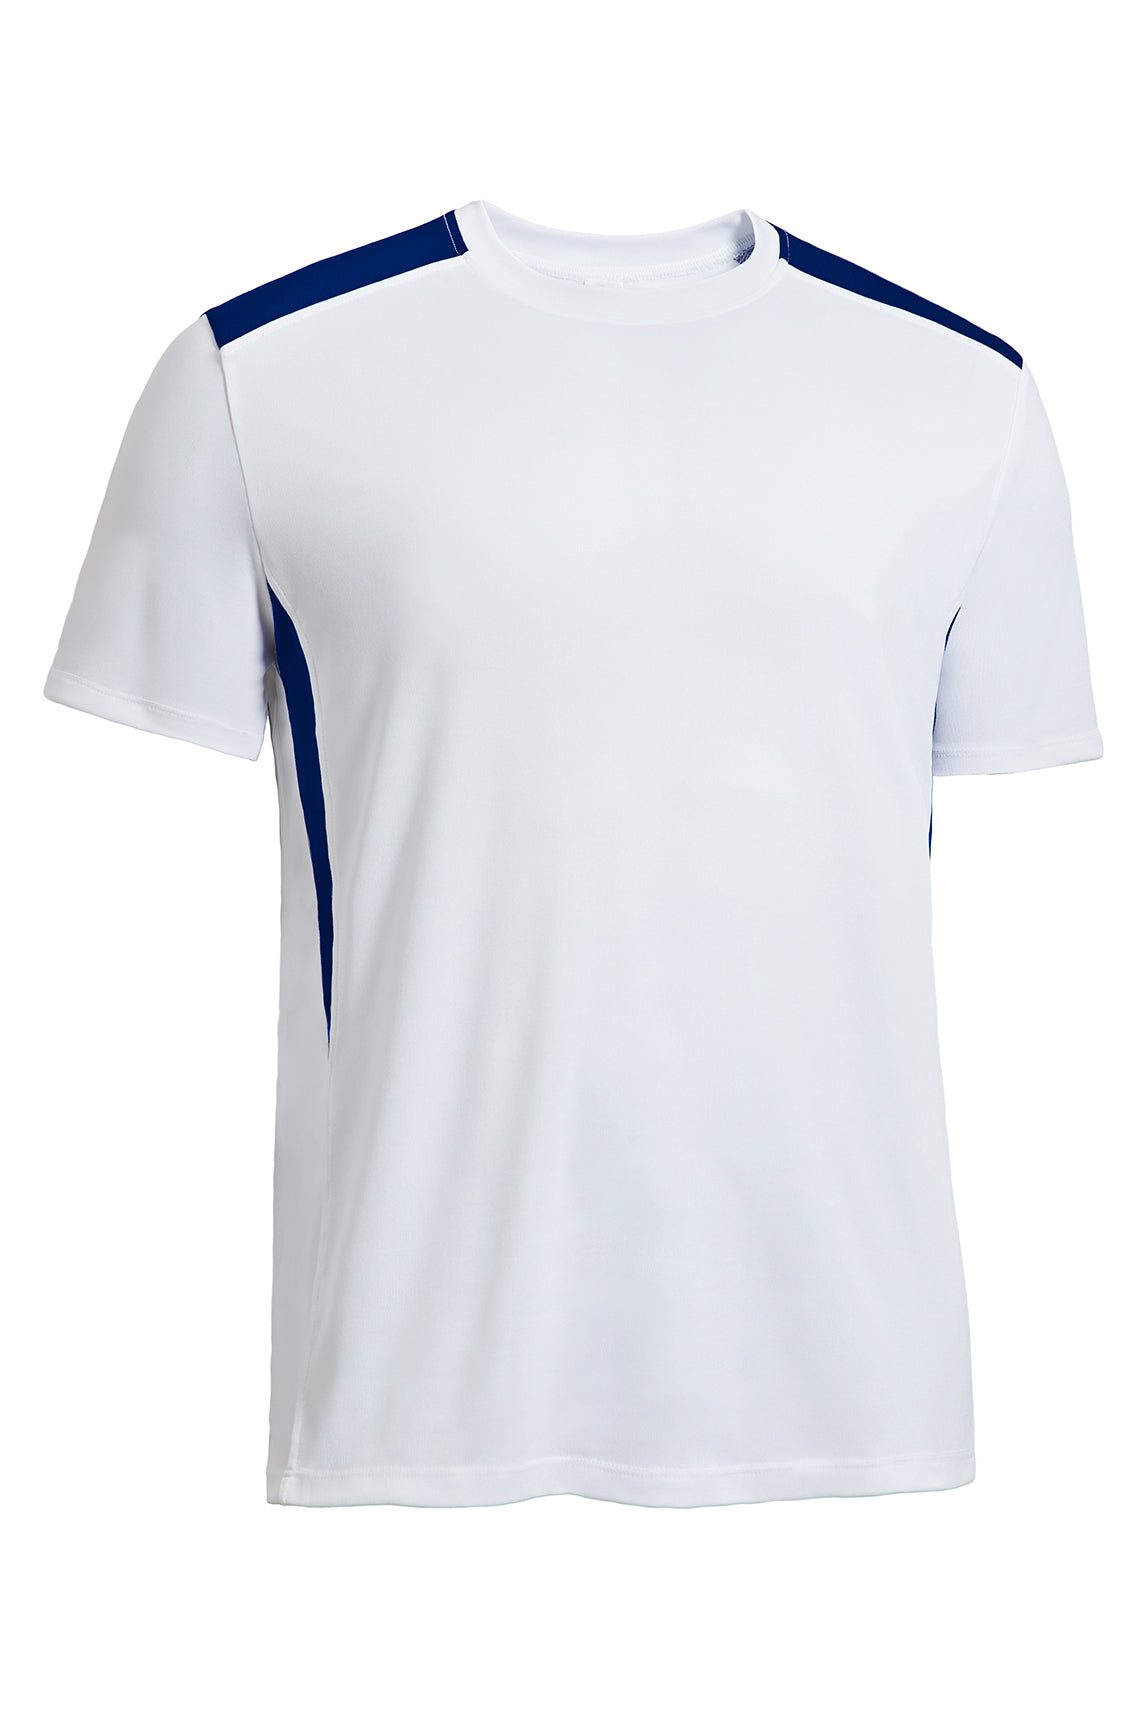 Expert Brand Wholesale Men's White Blue pk maX™ Stadium Tee#white-navy